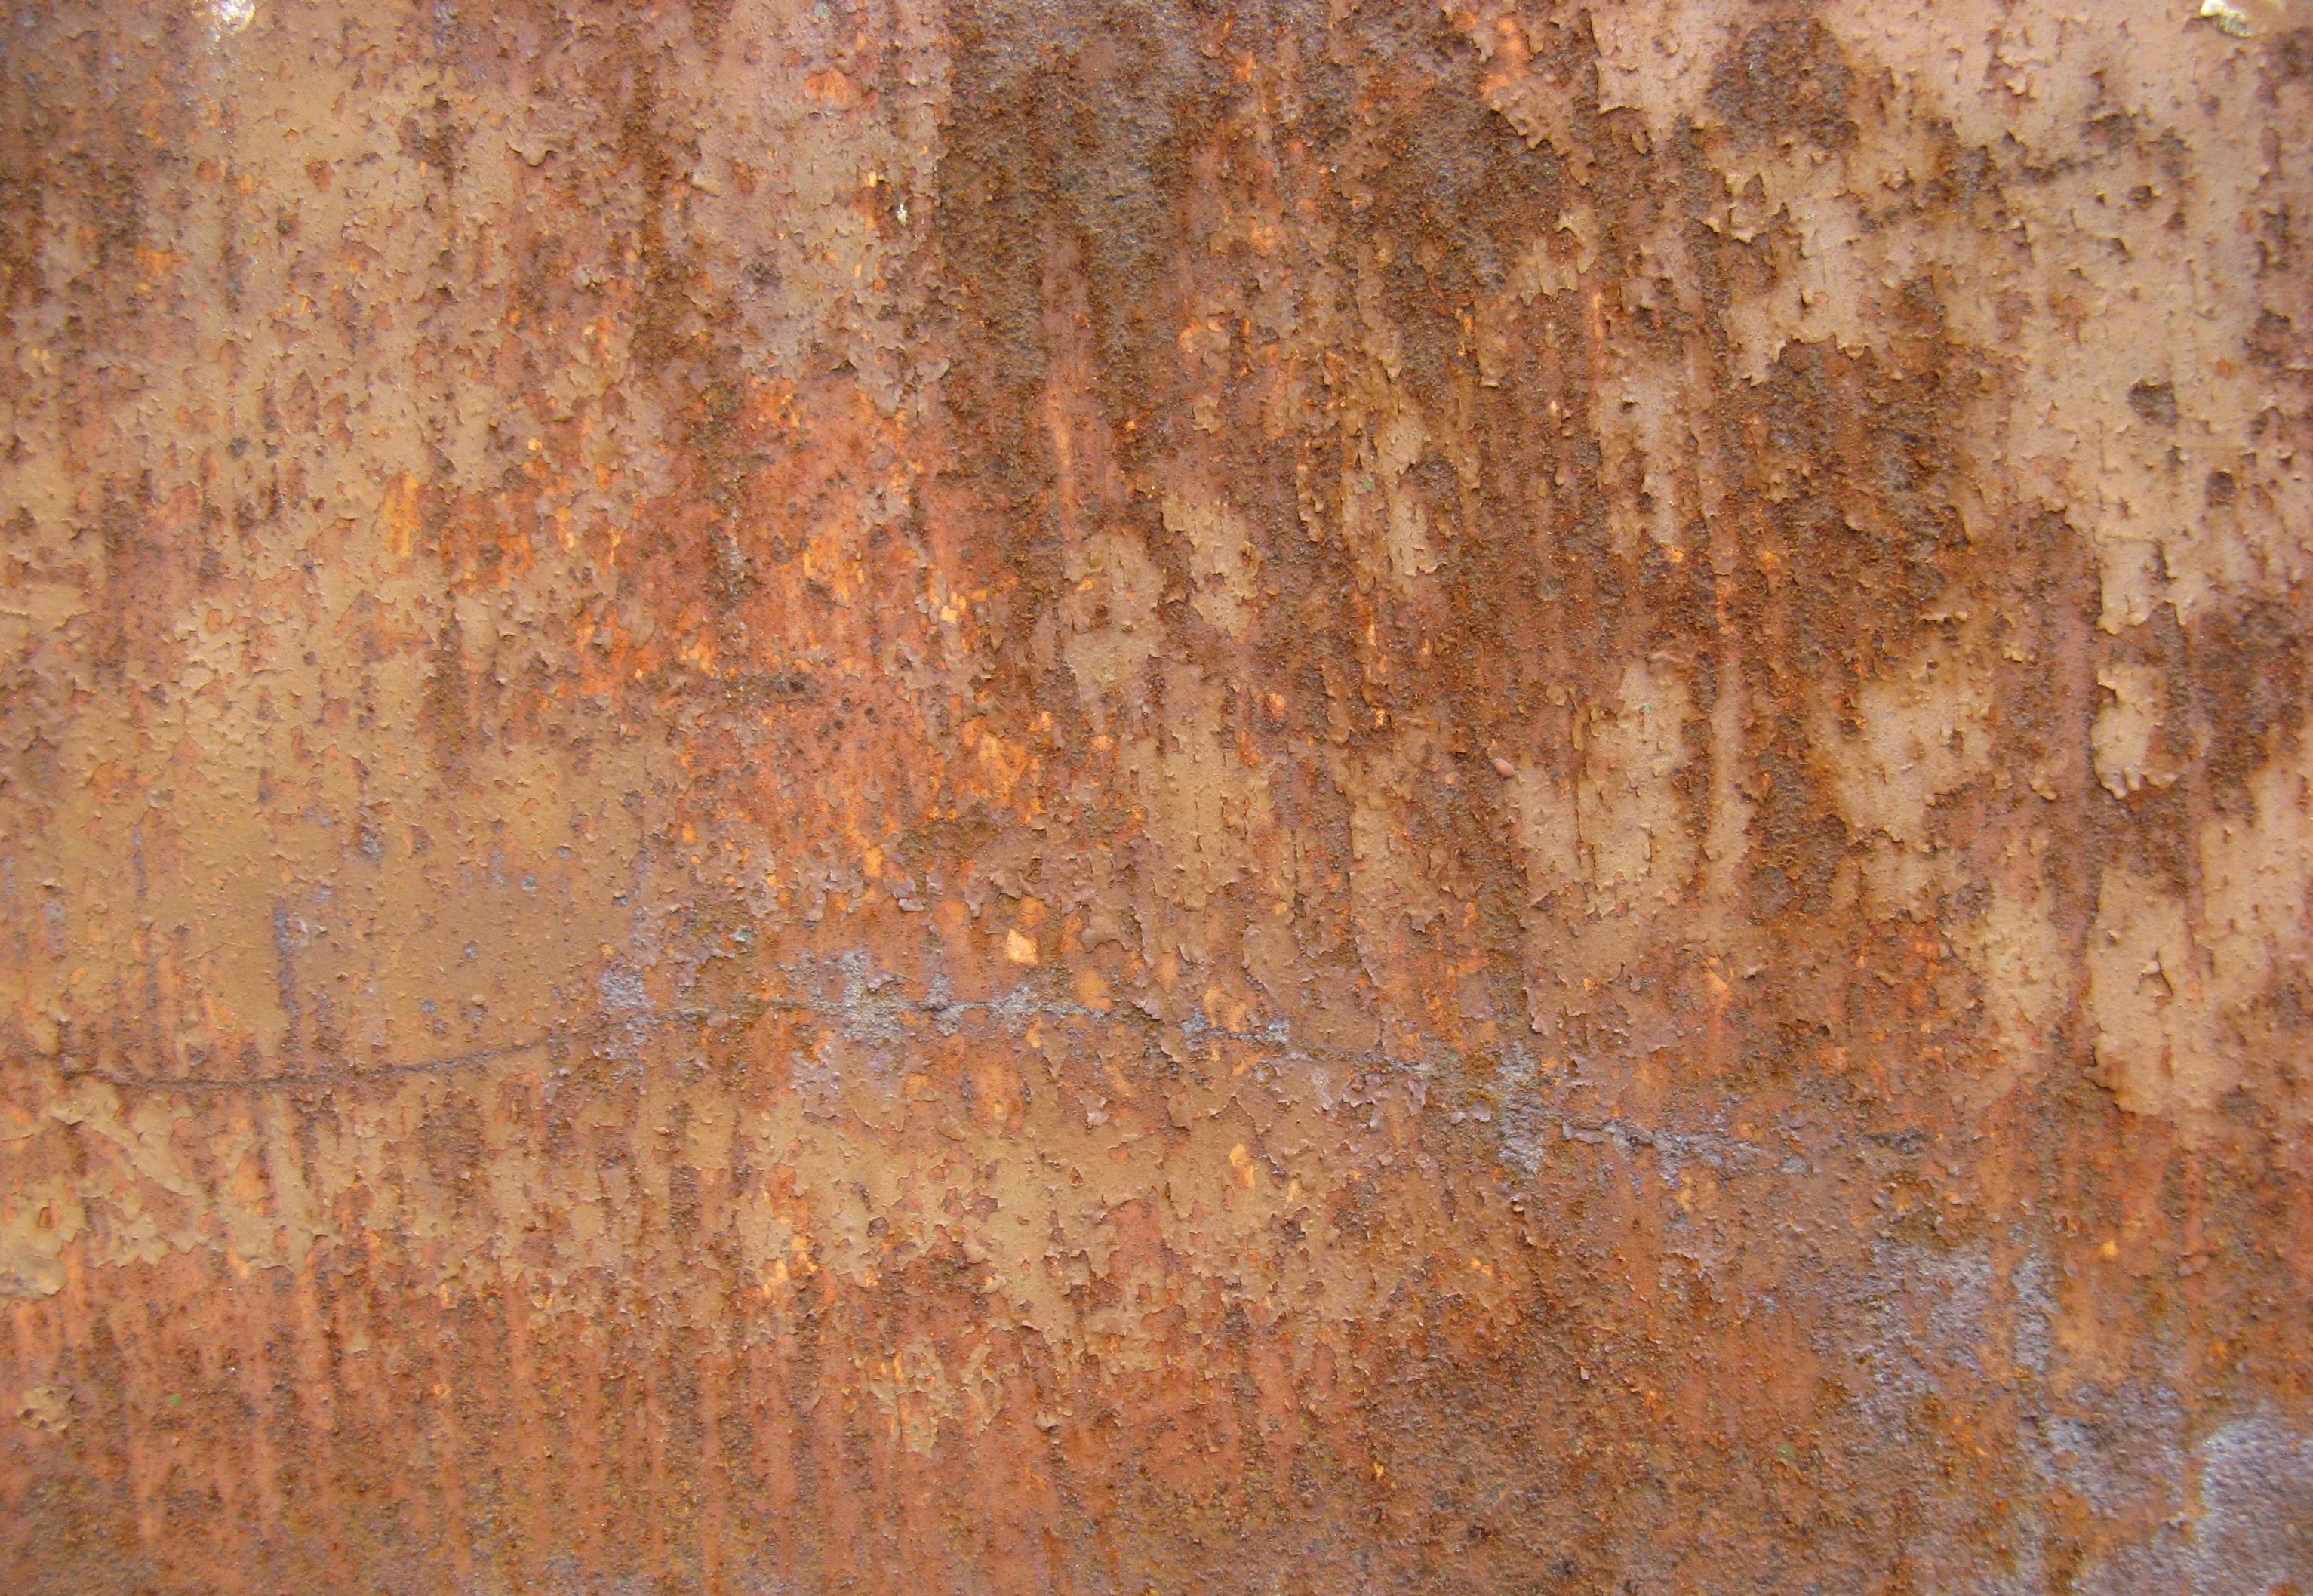 Rust texture photo